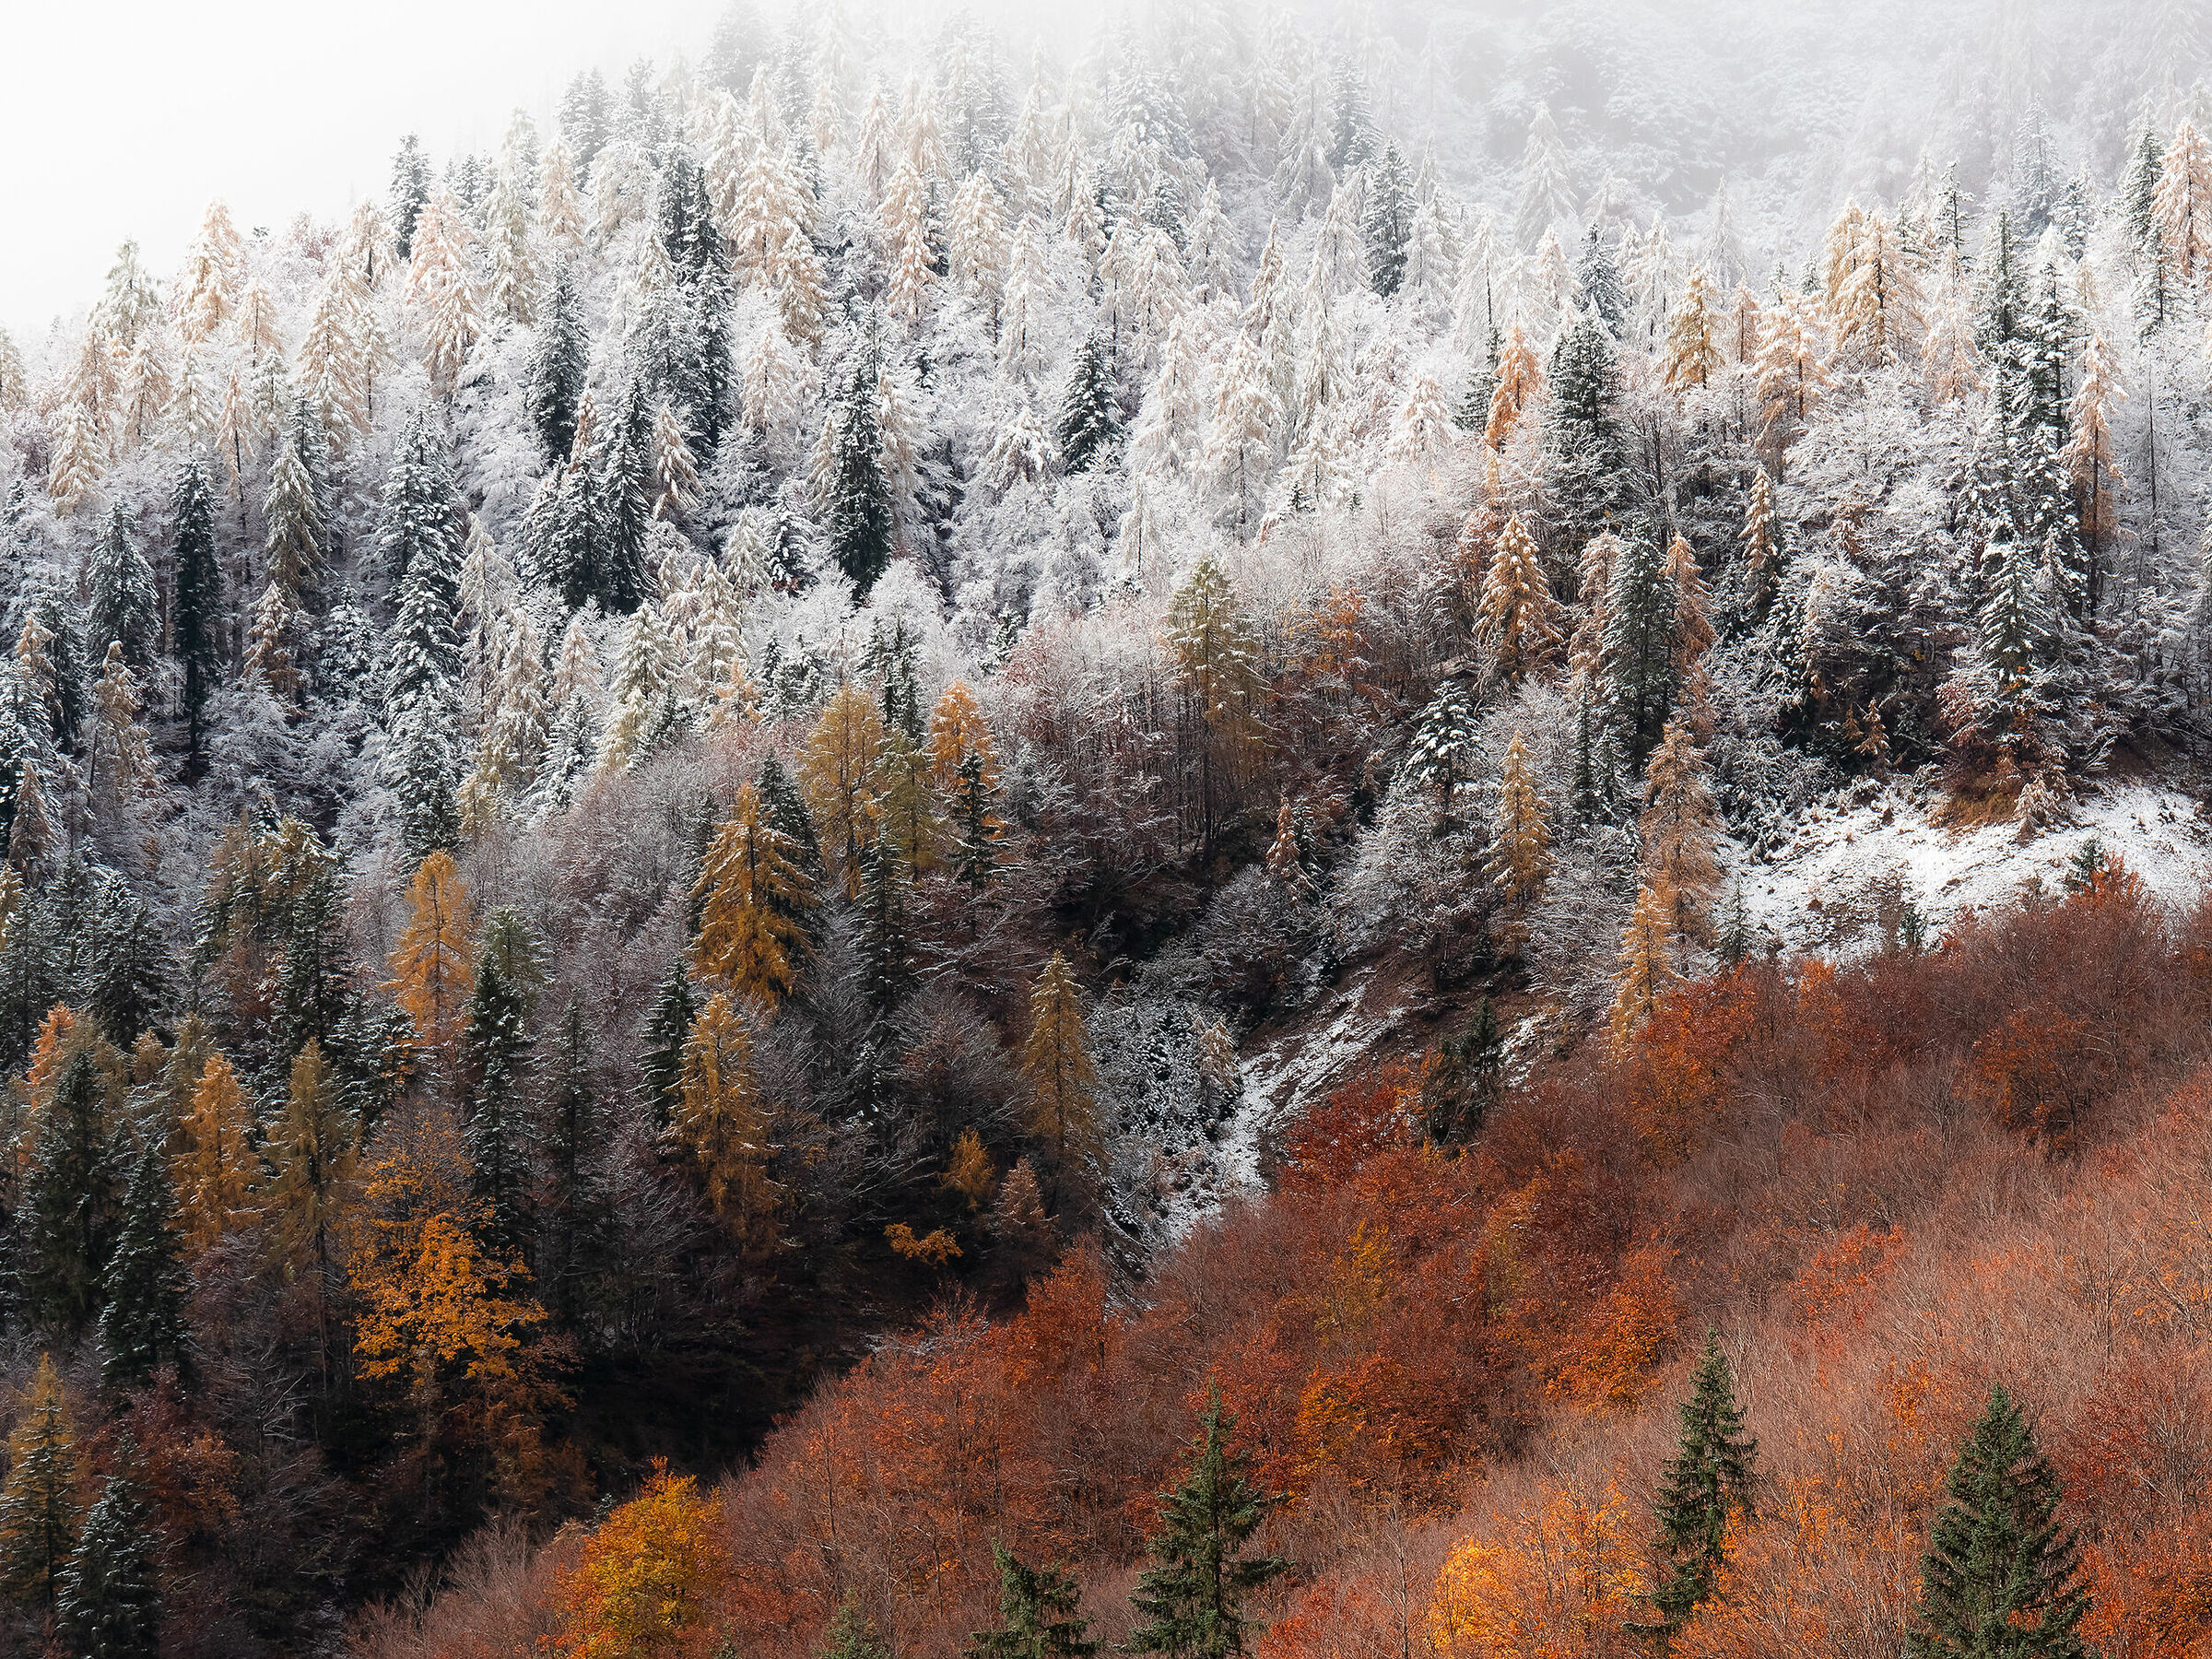 Fading into winter - Julian Alps...